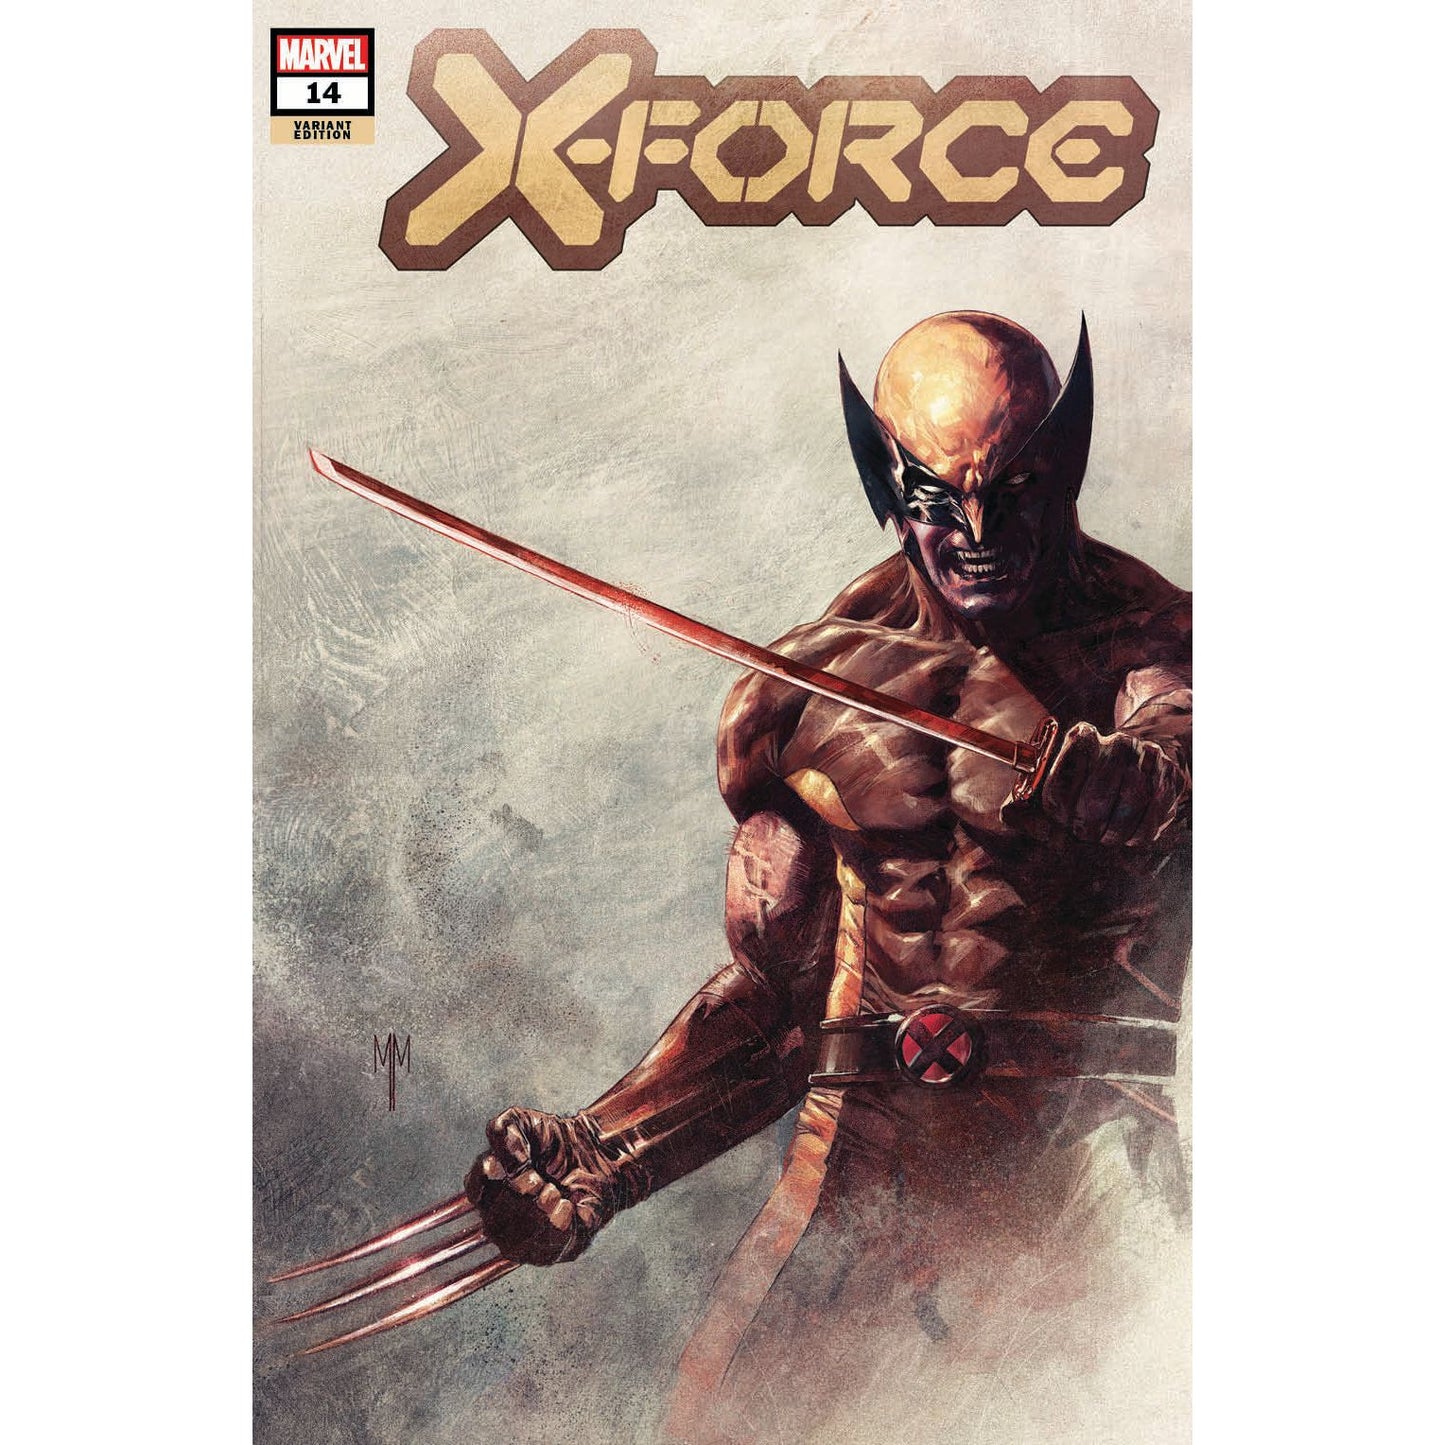 X-FORCE #14 UNKNOWN COMICS MARCO MASTRAZZO EXCLUSIVE VAR XOS (11/18/2020)